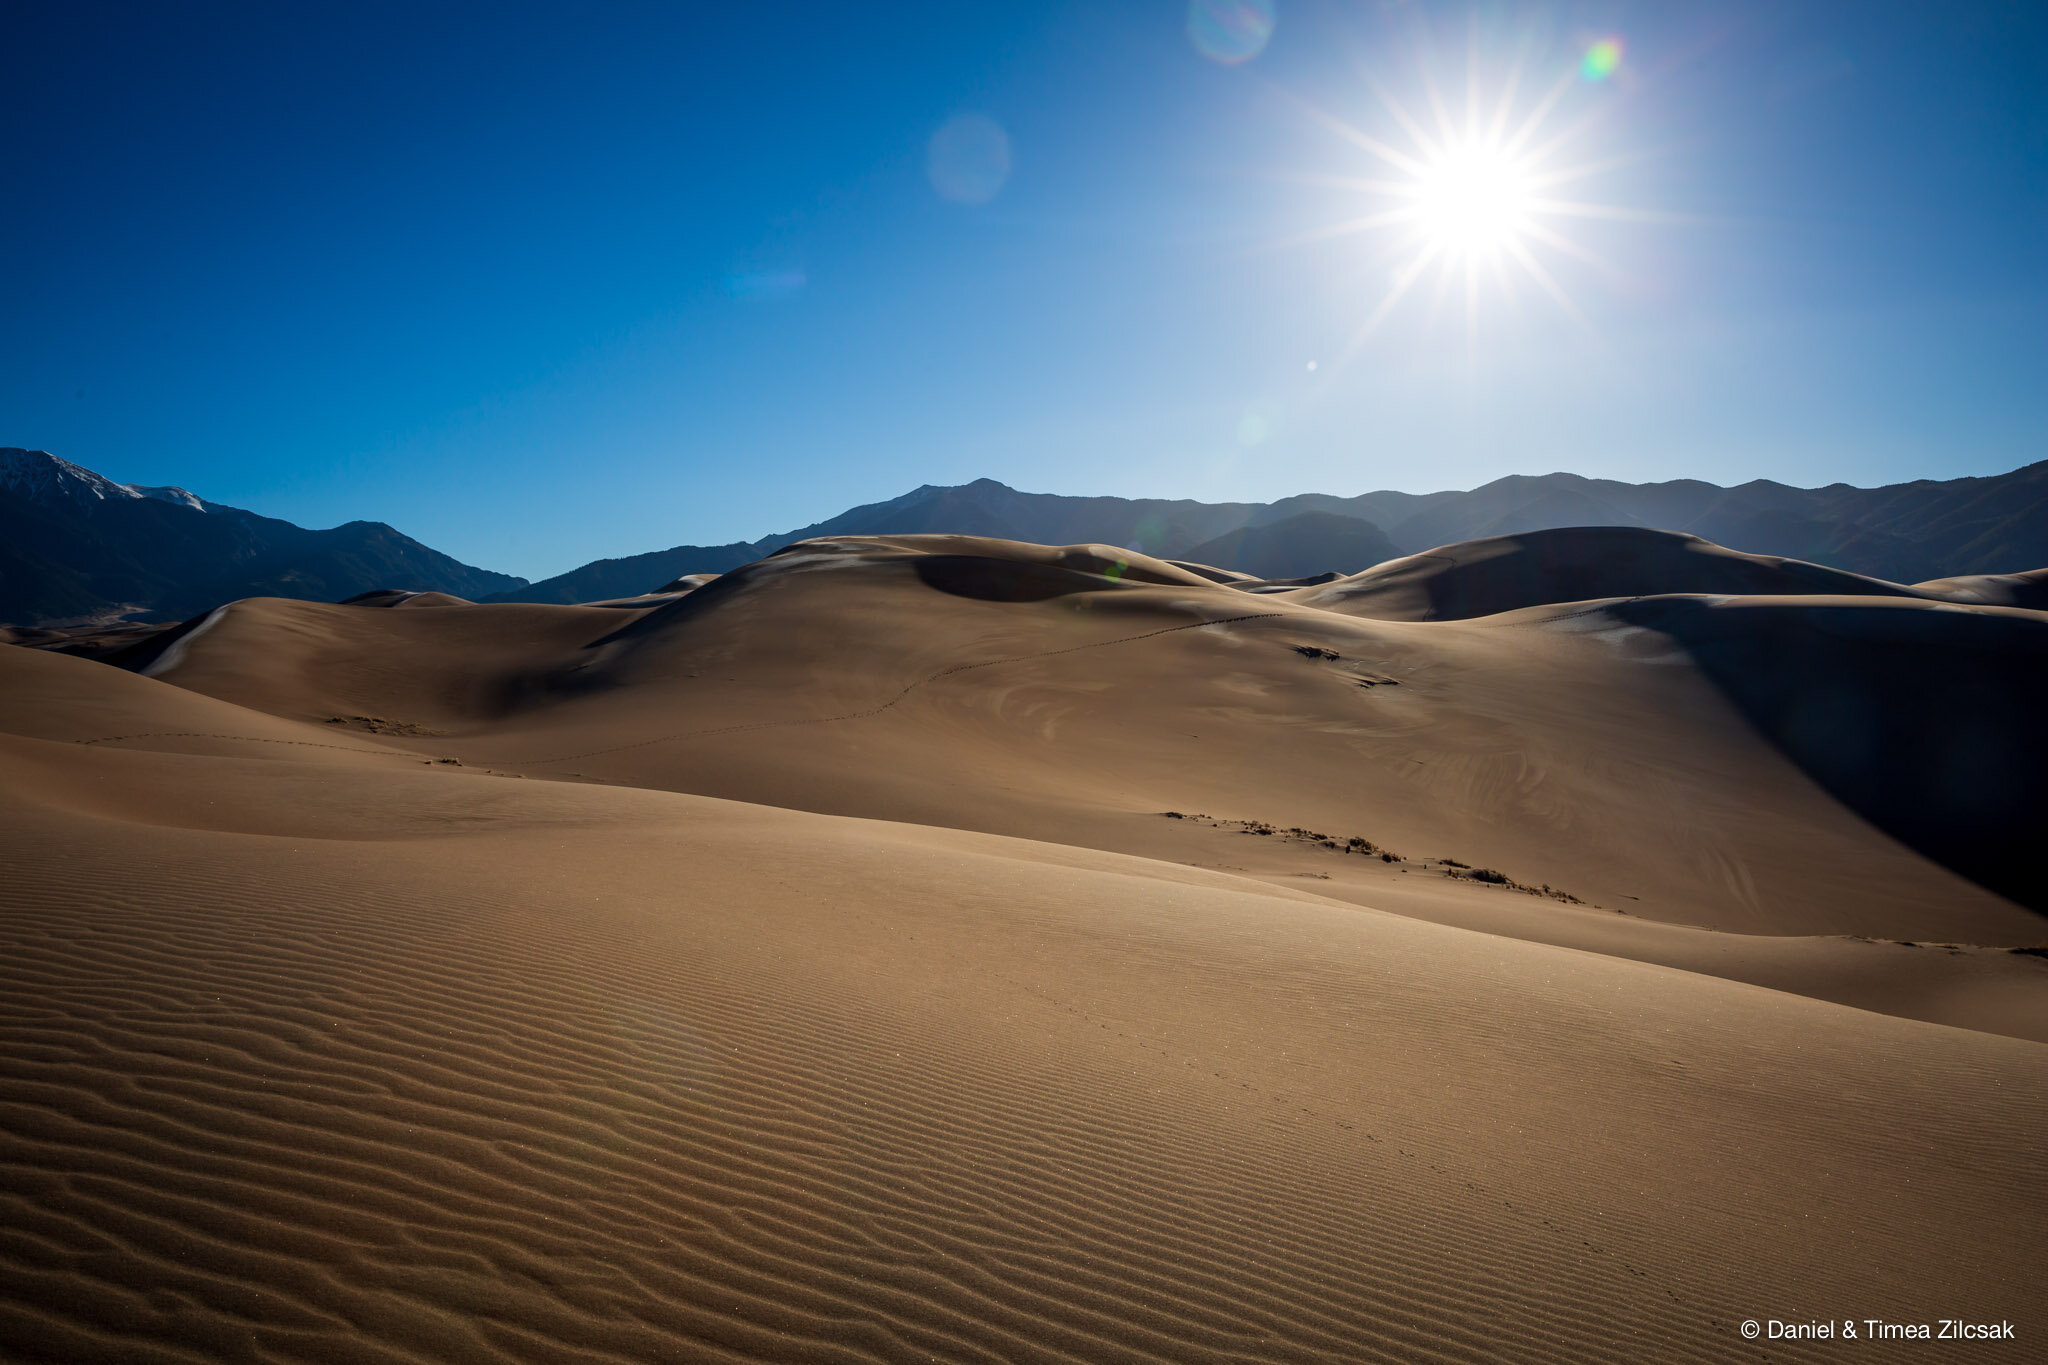 Great-Sand-Dunes-National-Park-9218.jpg